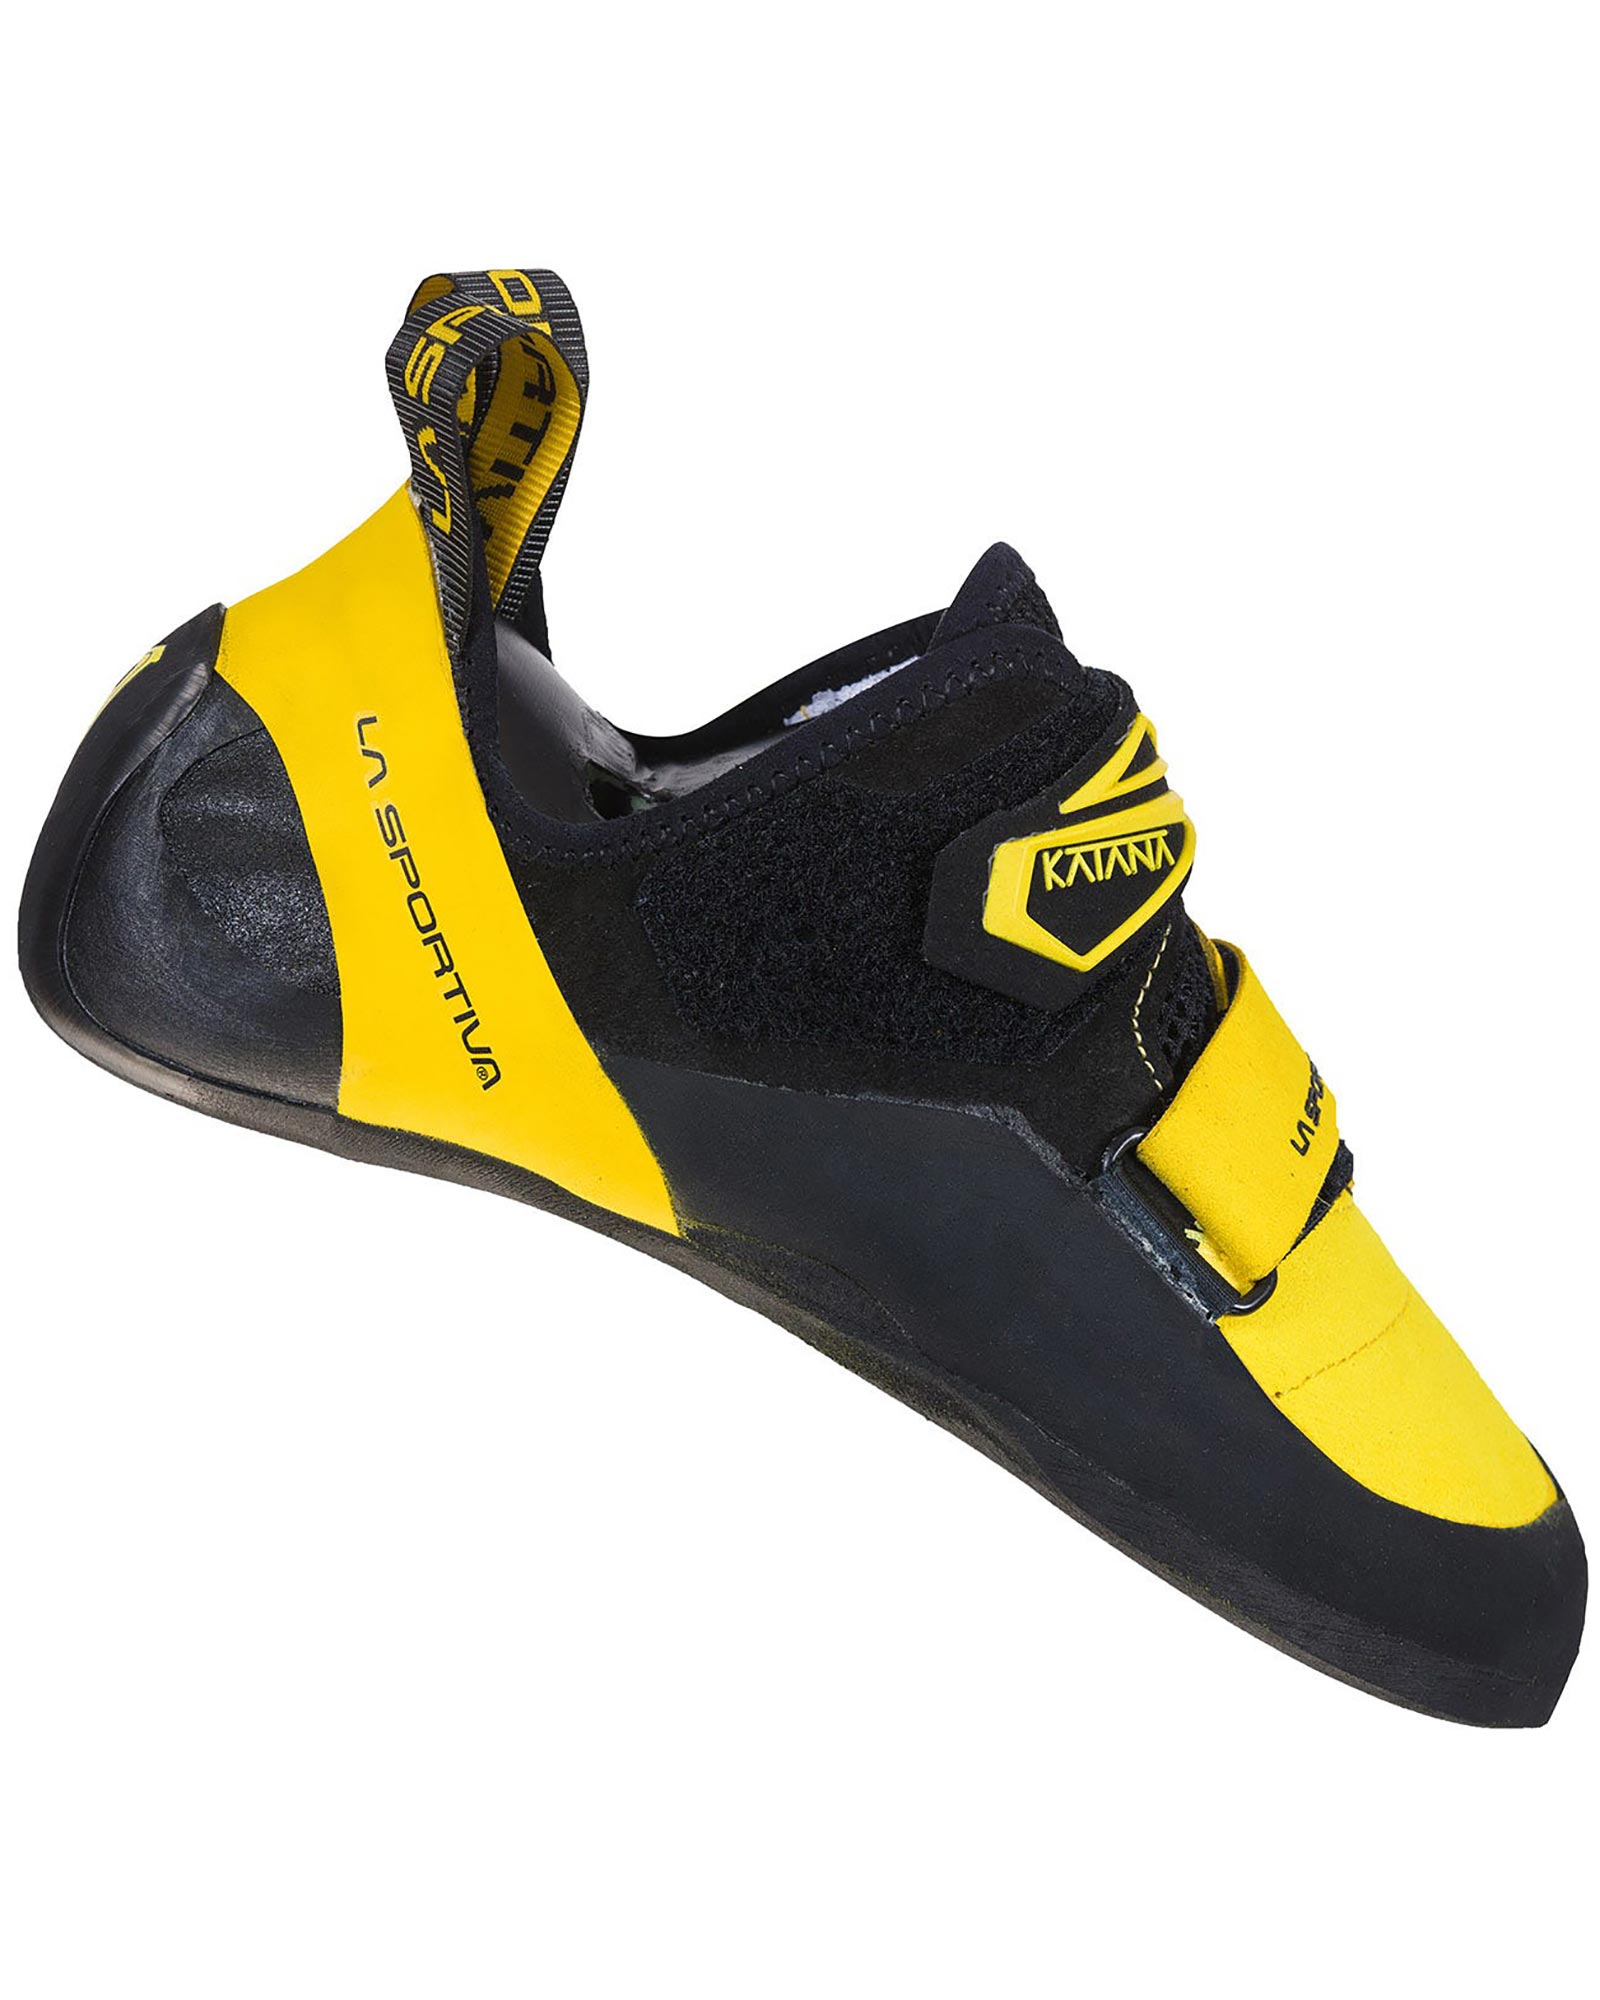 La Sportiva Katana Men’s Shoes - Yellow/Black EU 39